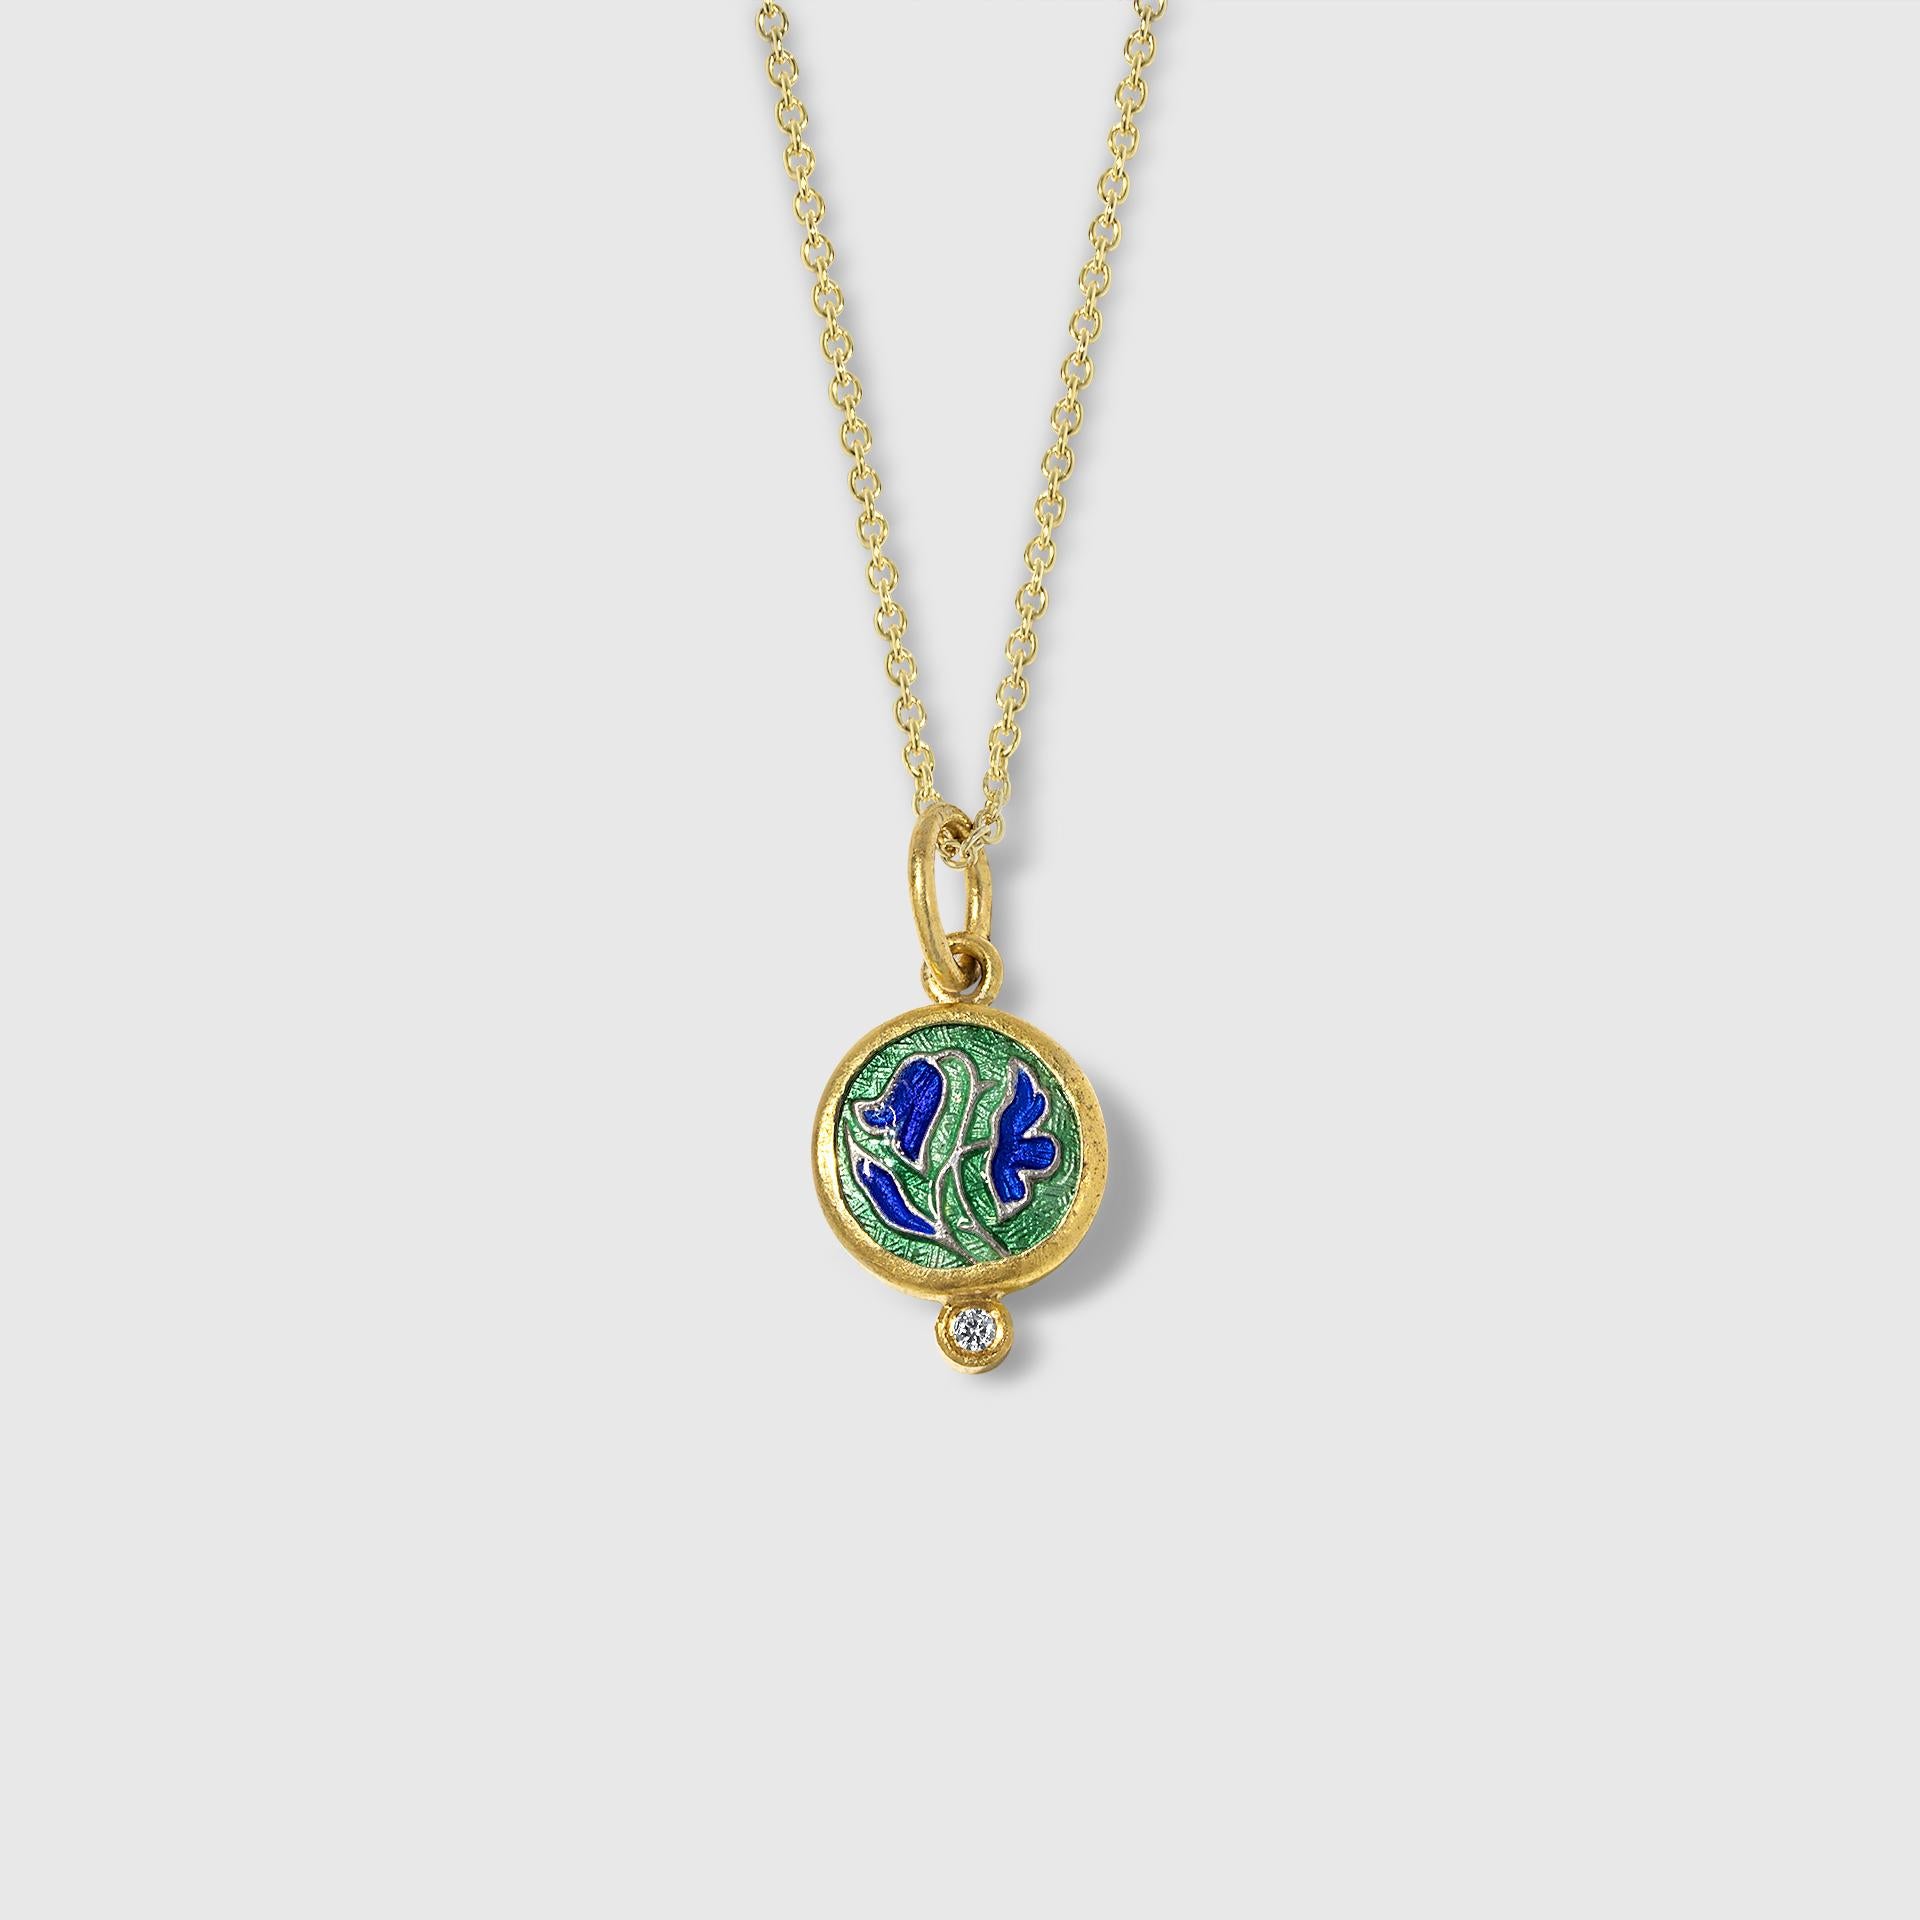 Round Cut Enamel Tulips Charm in Green & Blue, Amulet Pendant Necklace w/ Diamond 24k Gold